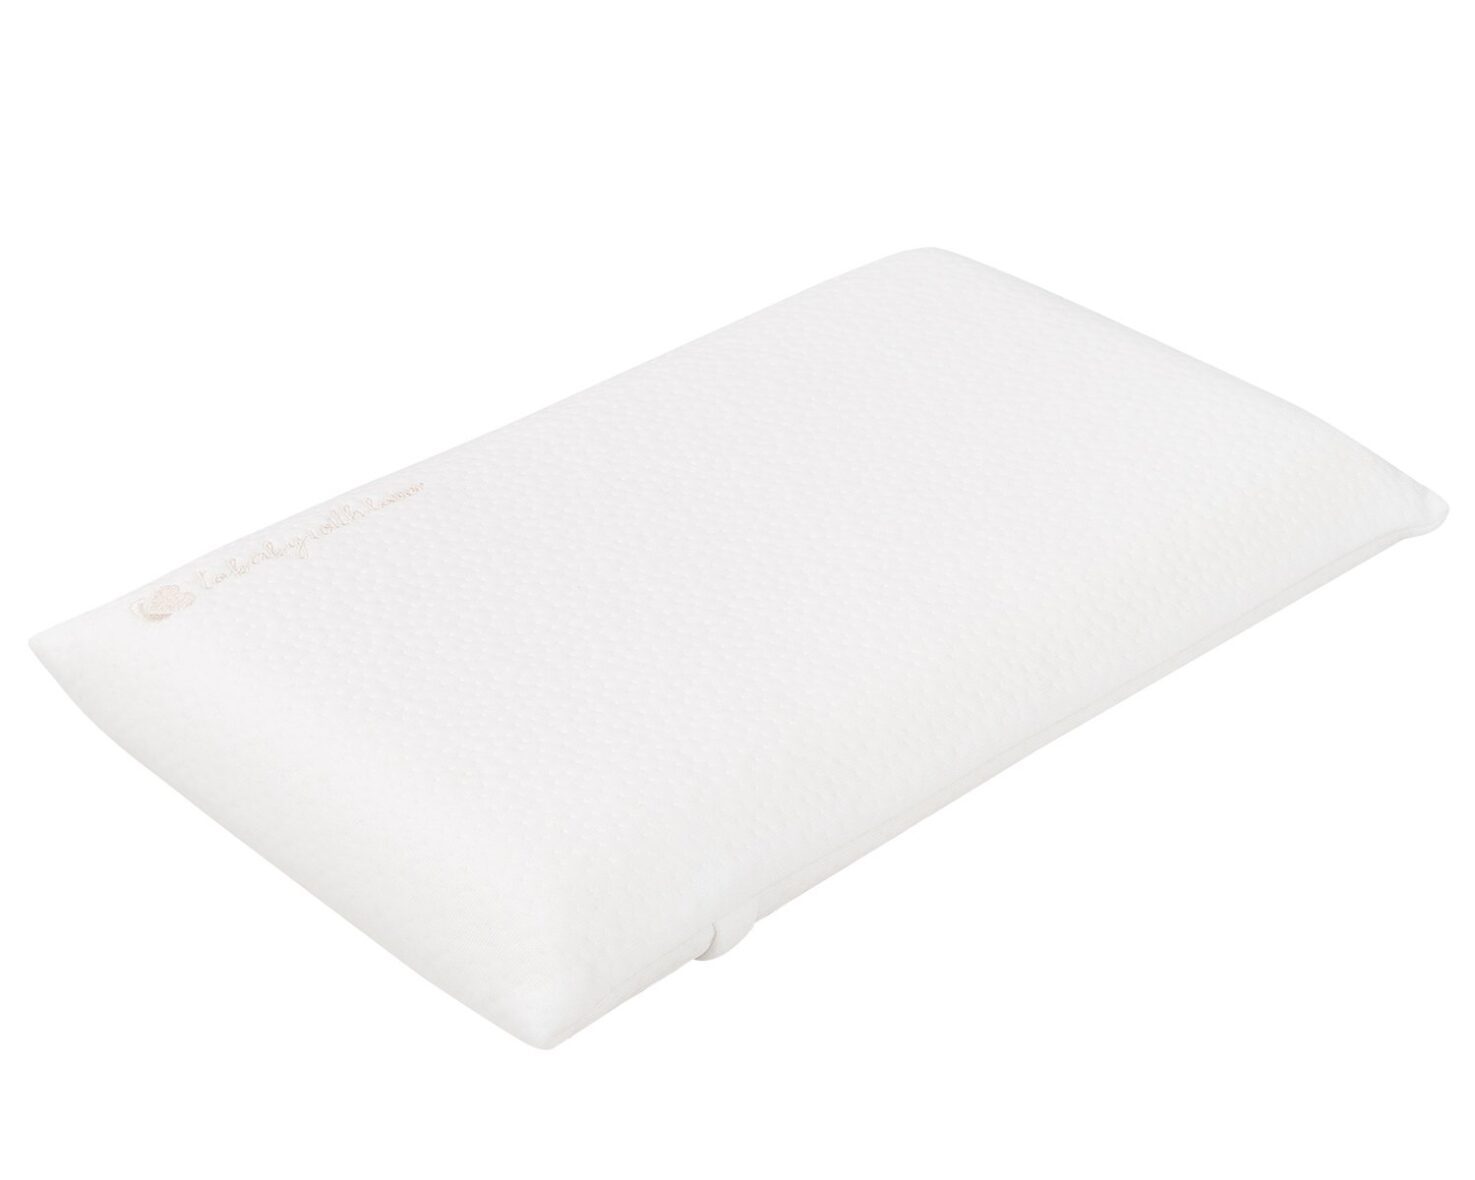 ventilated-pillow-Airknit-White_31106010130_1-1.jpg